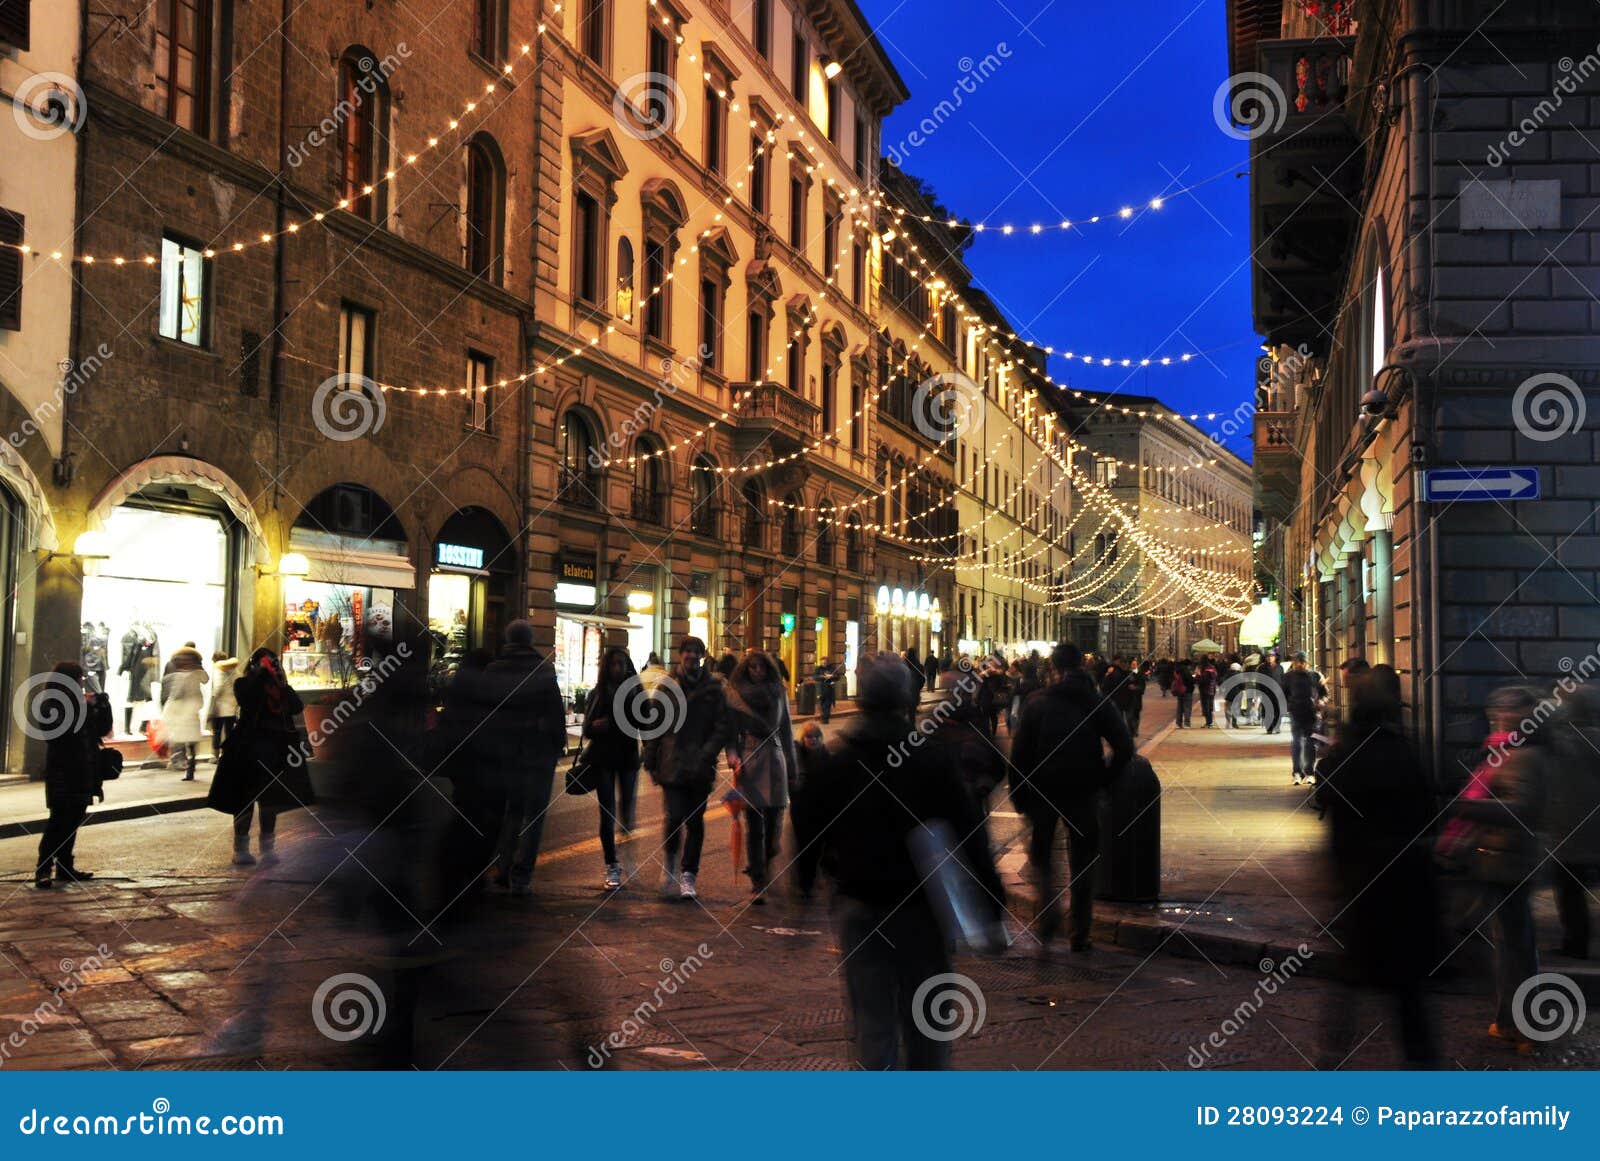 Florence Night Street Wolking People Editorial Stock Image - Image of ...